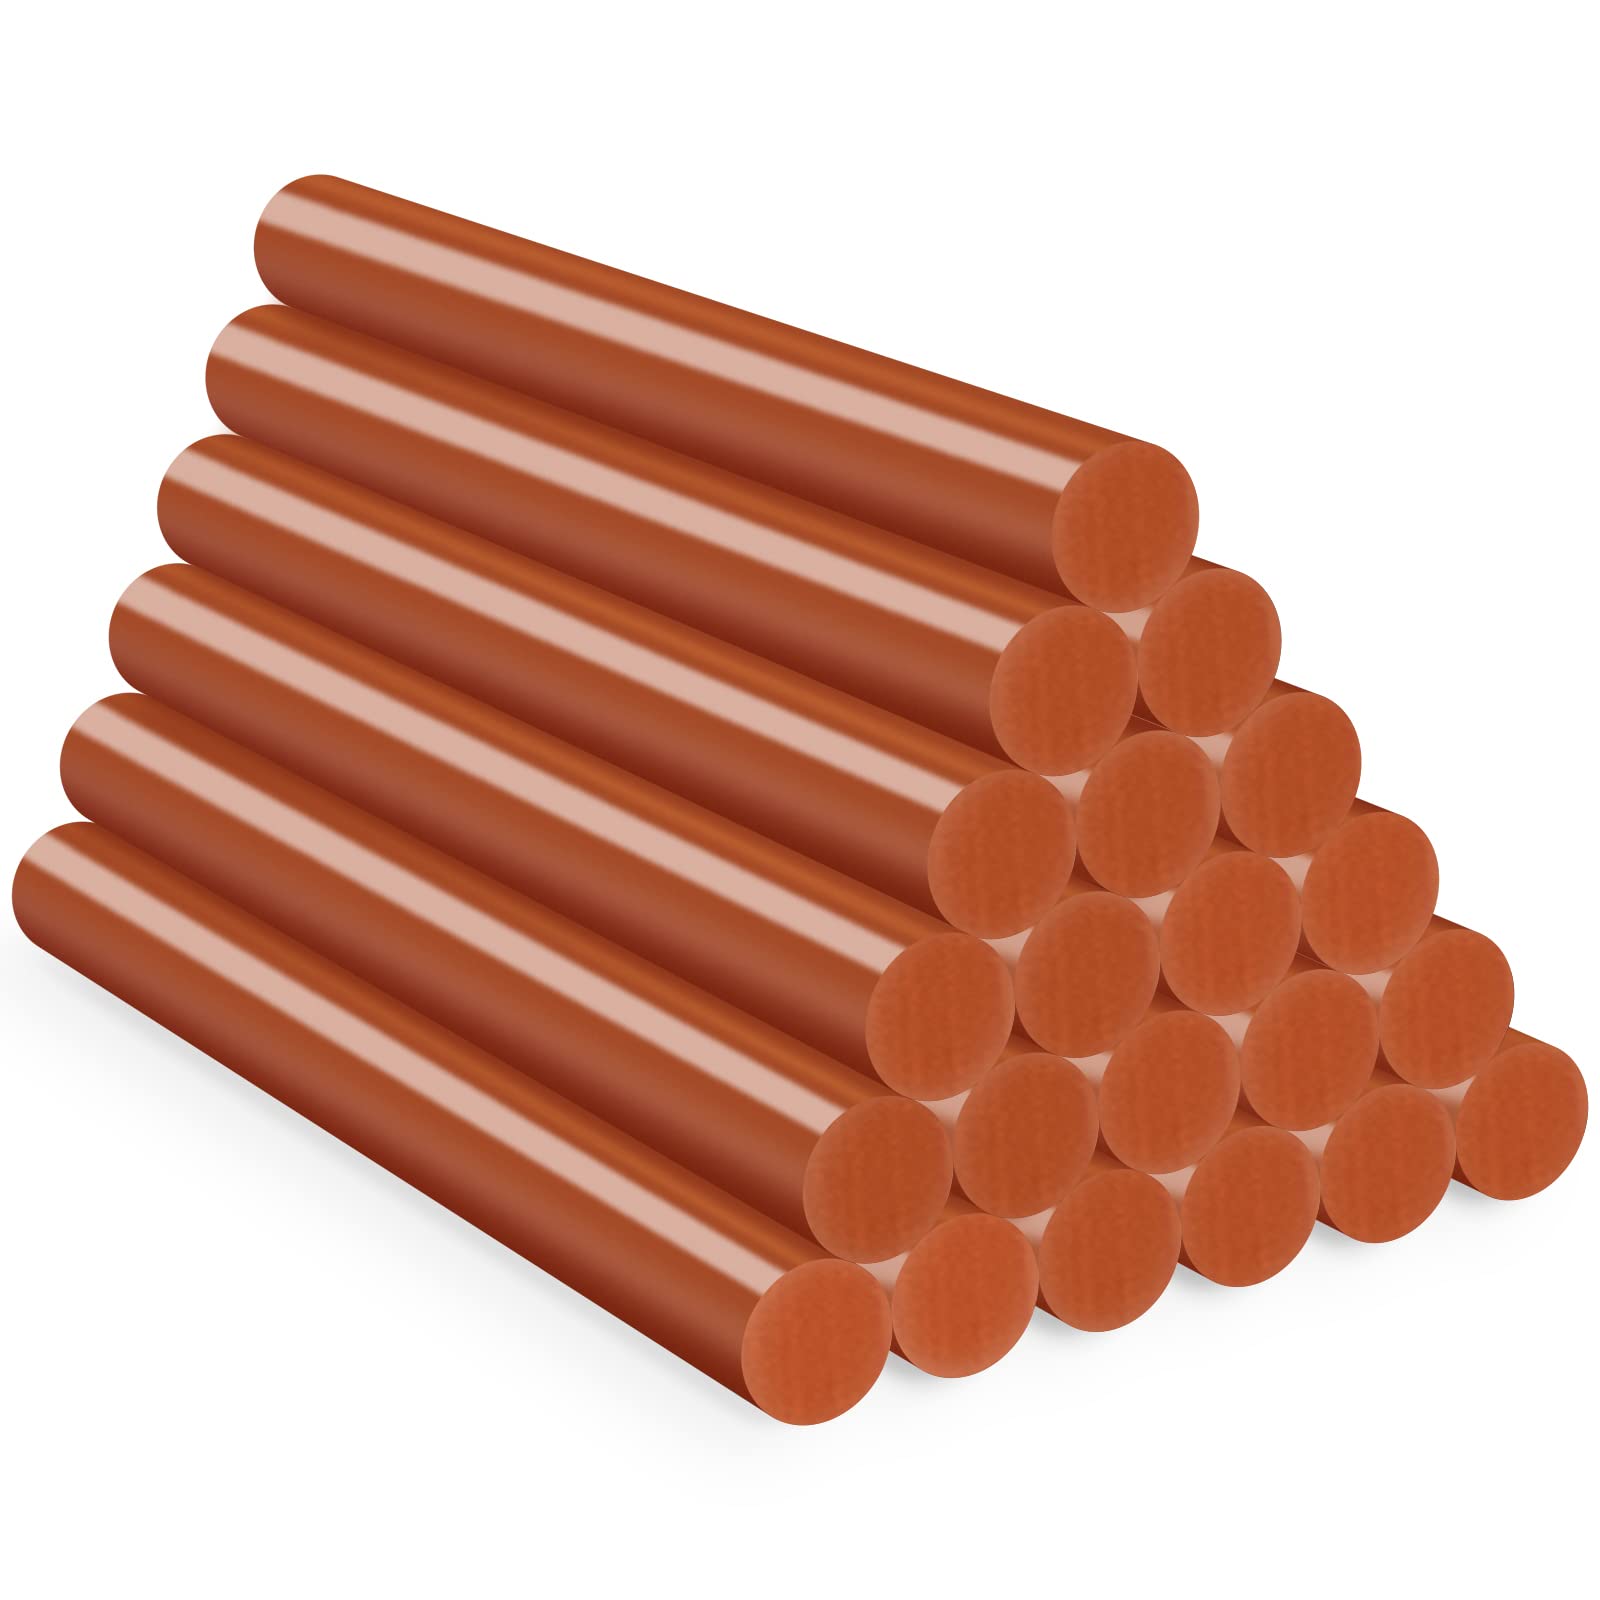 Brown Hot Glue Sticks Full Size, ENPOINT 4 Long x 0.43 Dia Hot